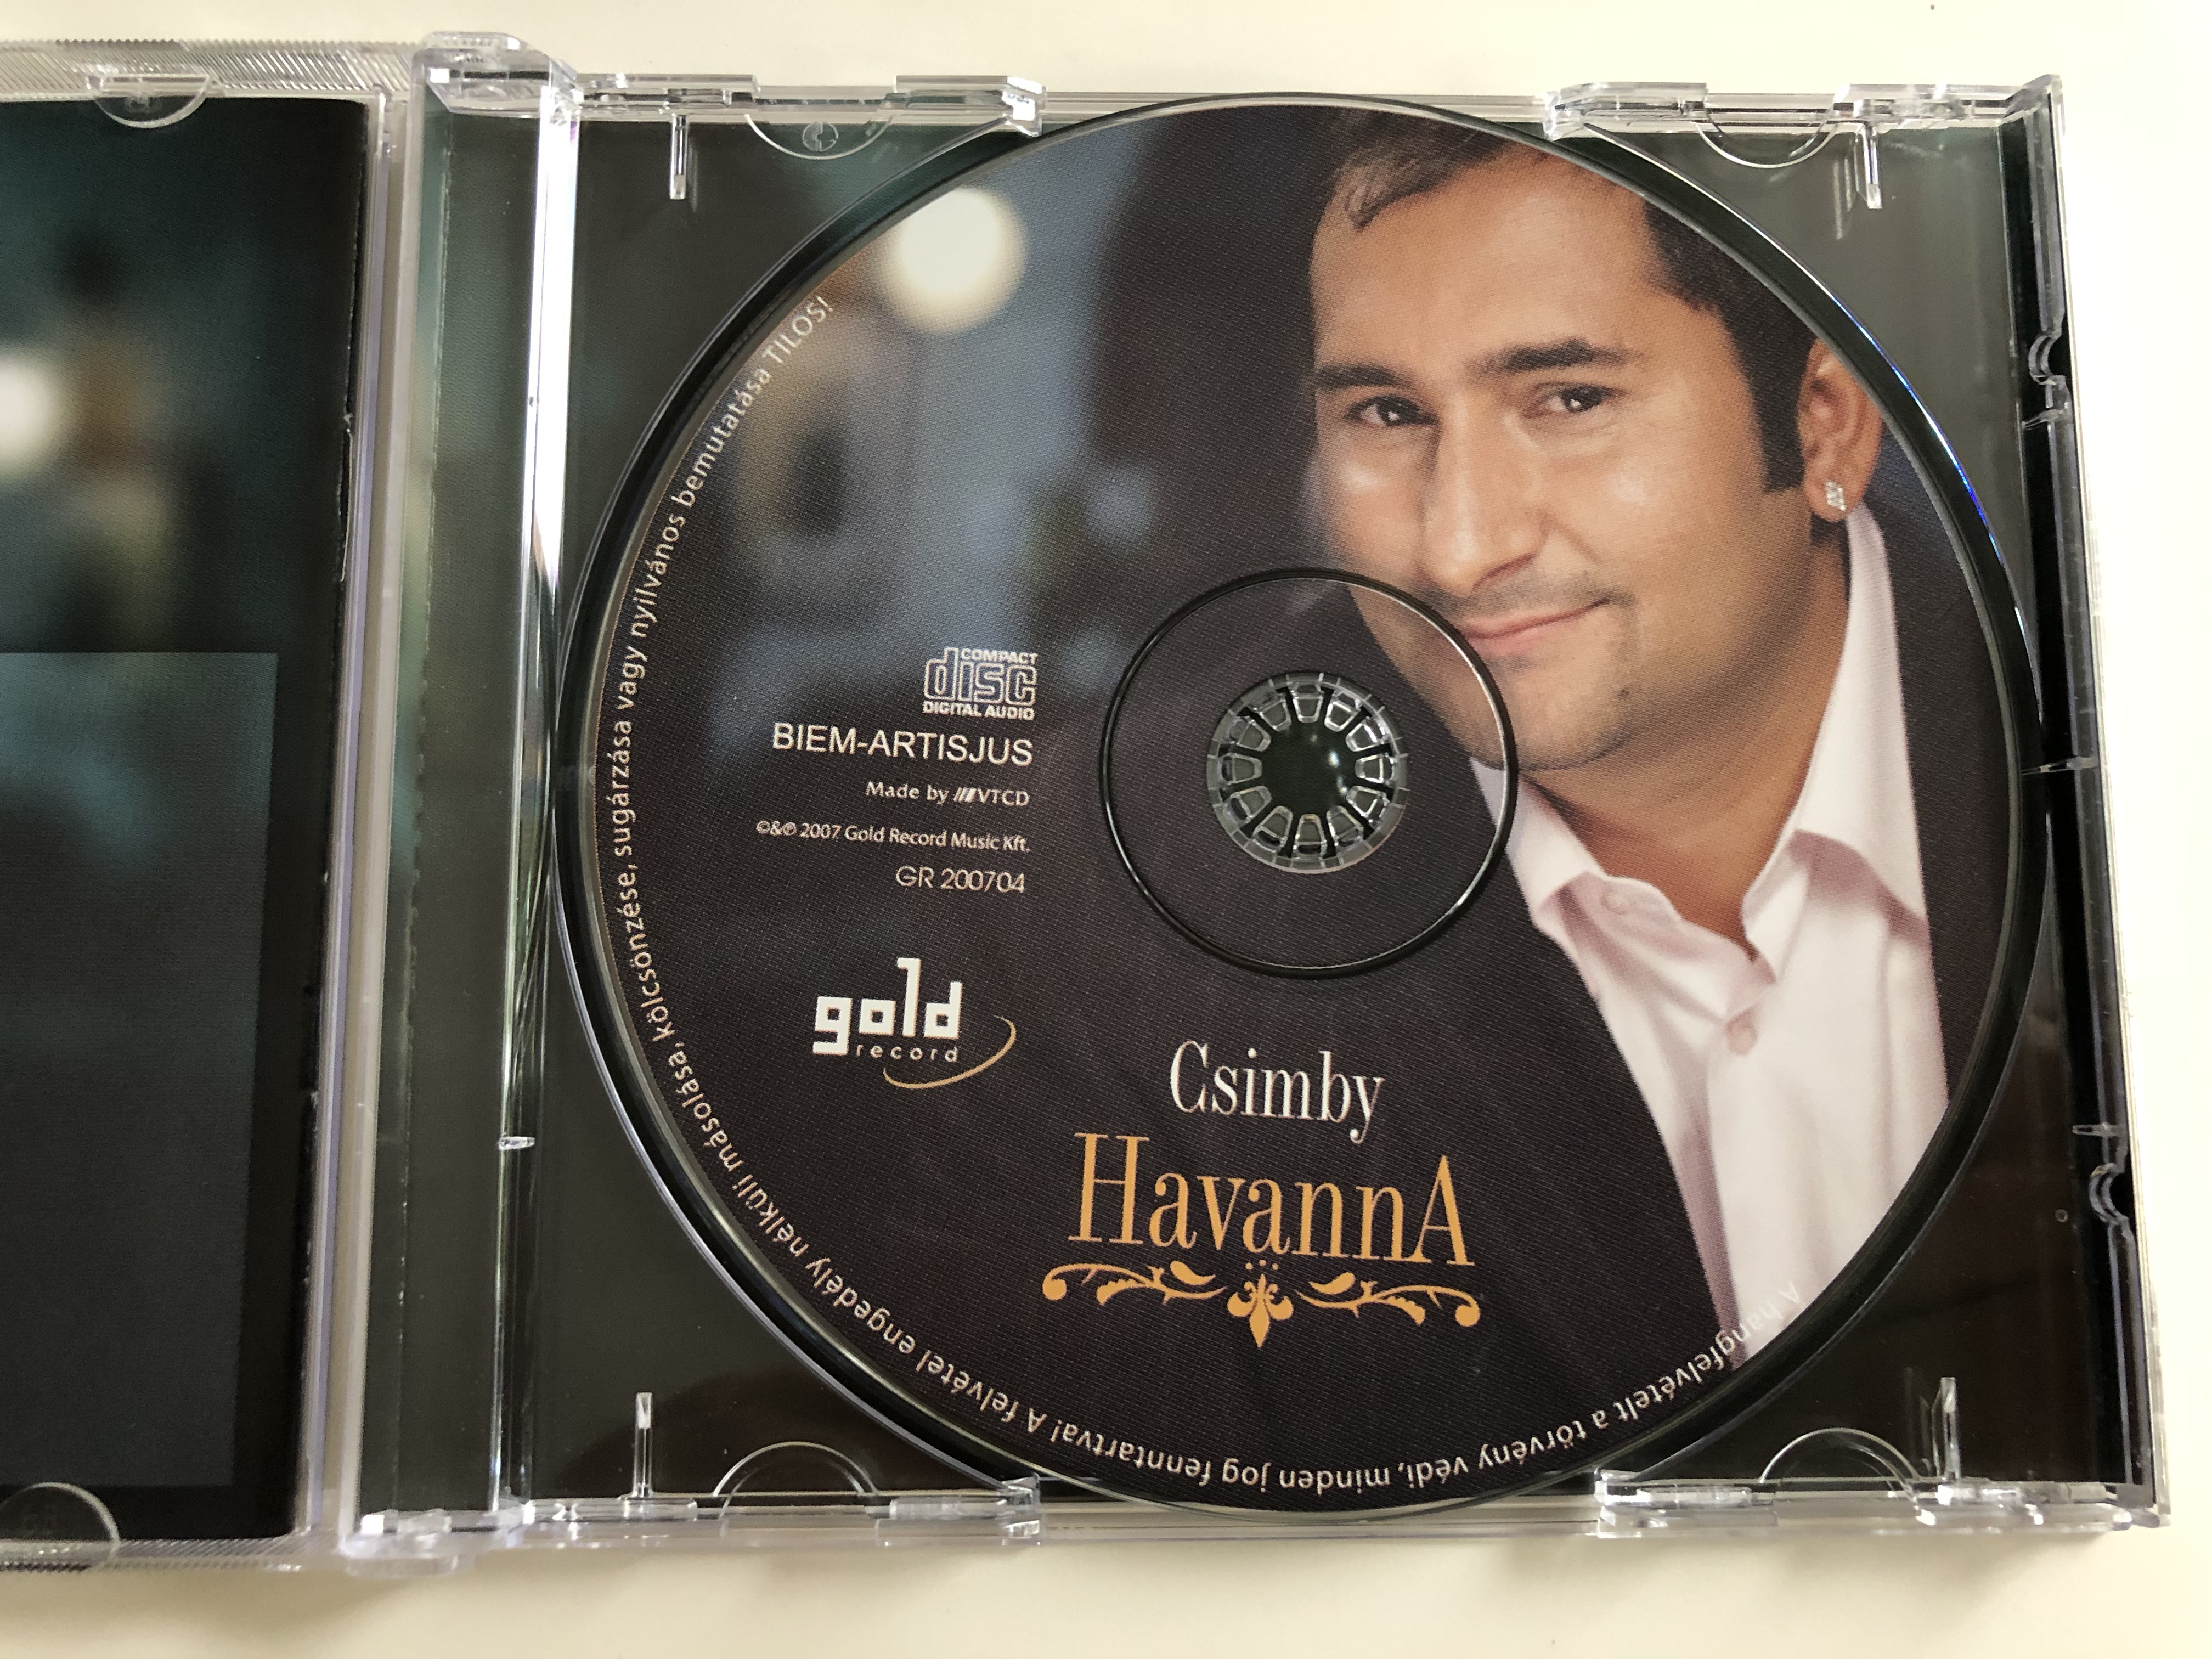 csimby-havanna-gold-record-audio-cd-2007-gr-200702-6-.jpg